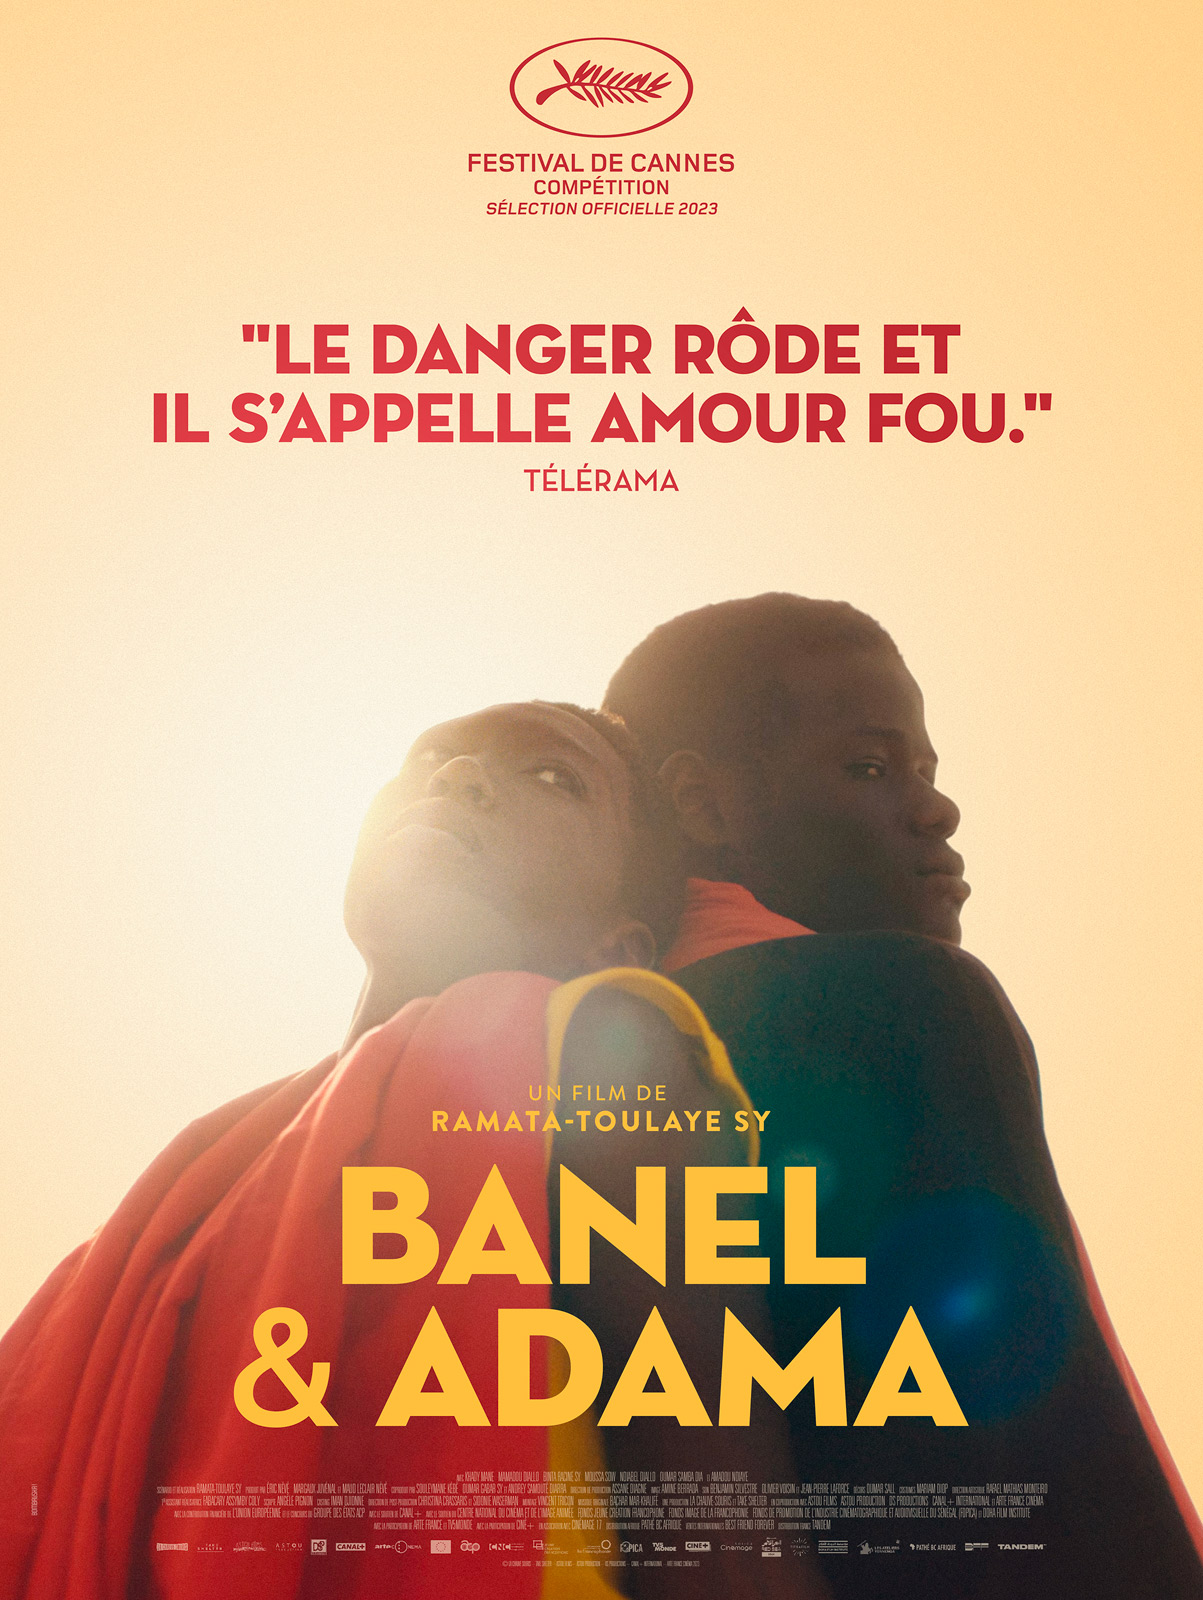 Banel & Adama - film 2023 streaming VF gratuit complet